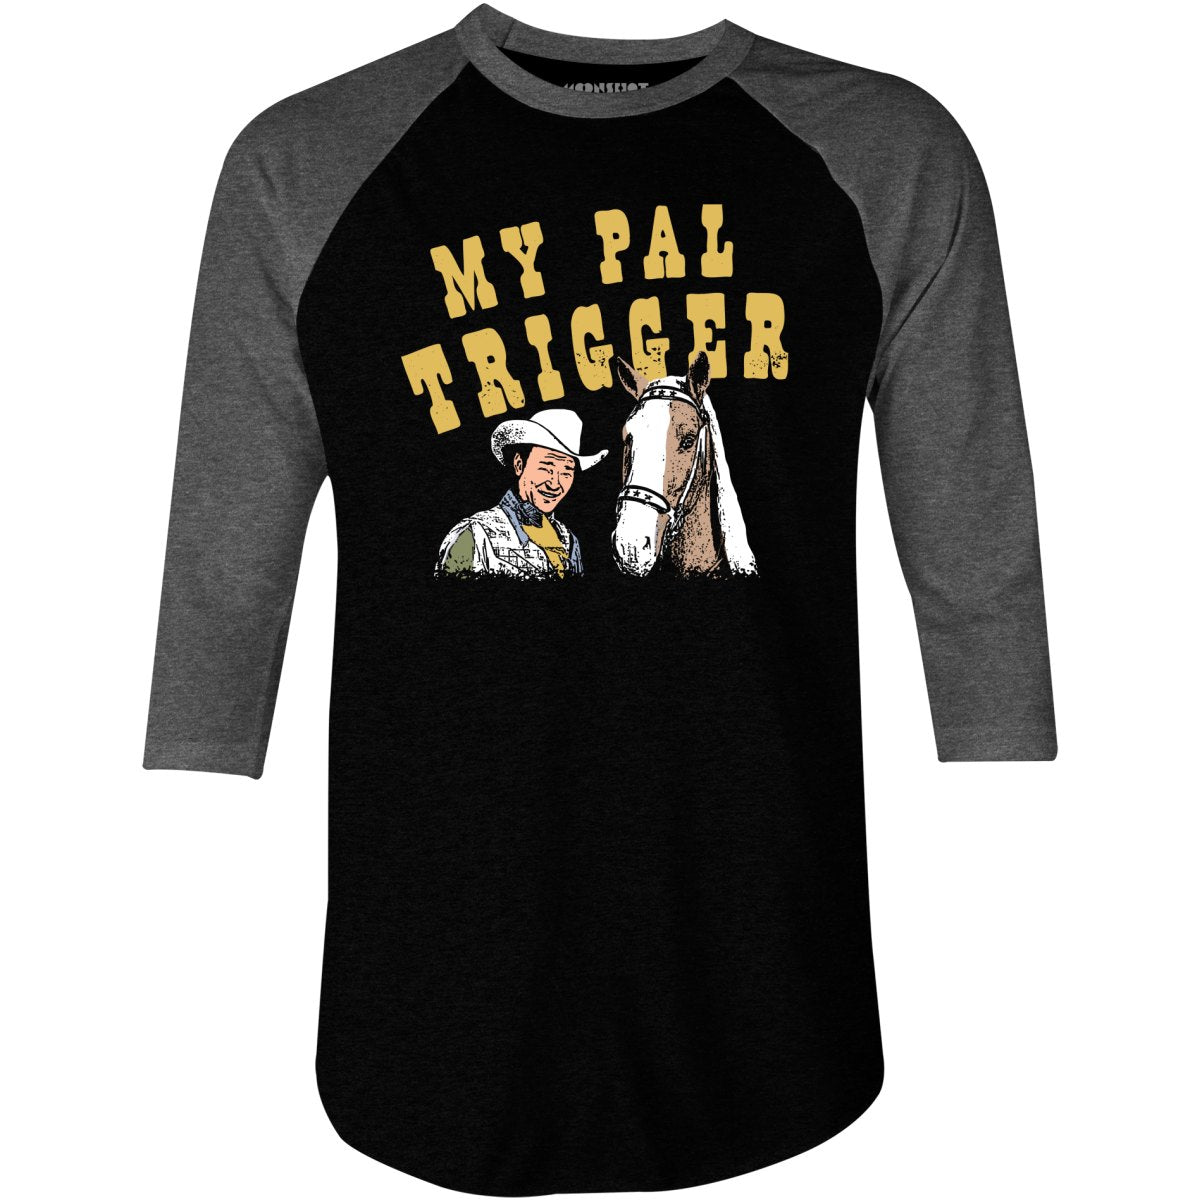 My Pal Trigger - 3/4 Sleeve Raglan T-Shirt